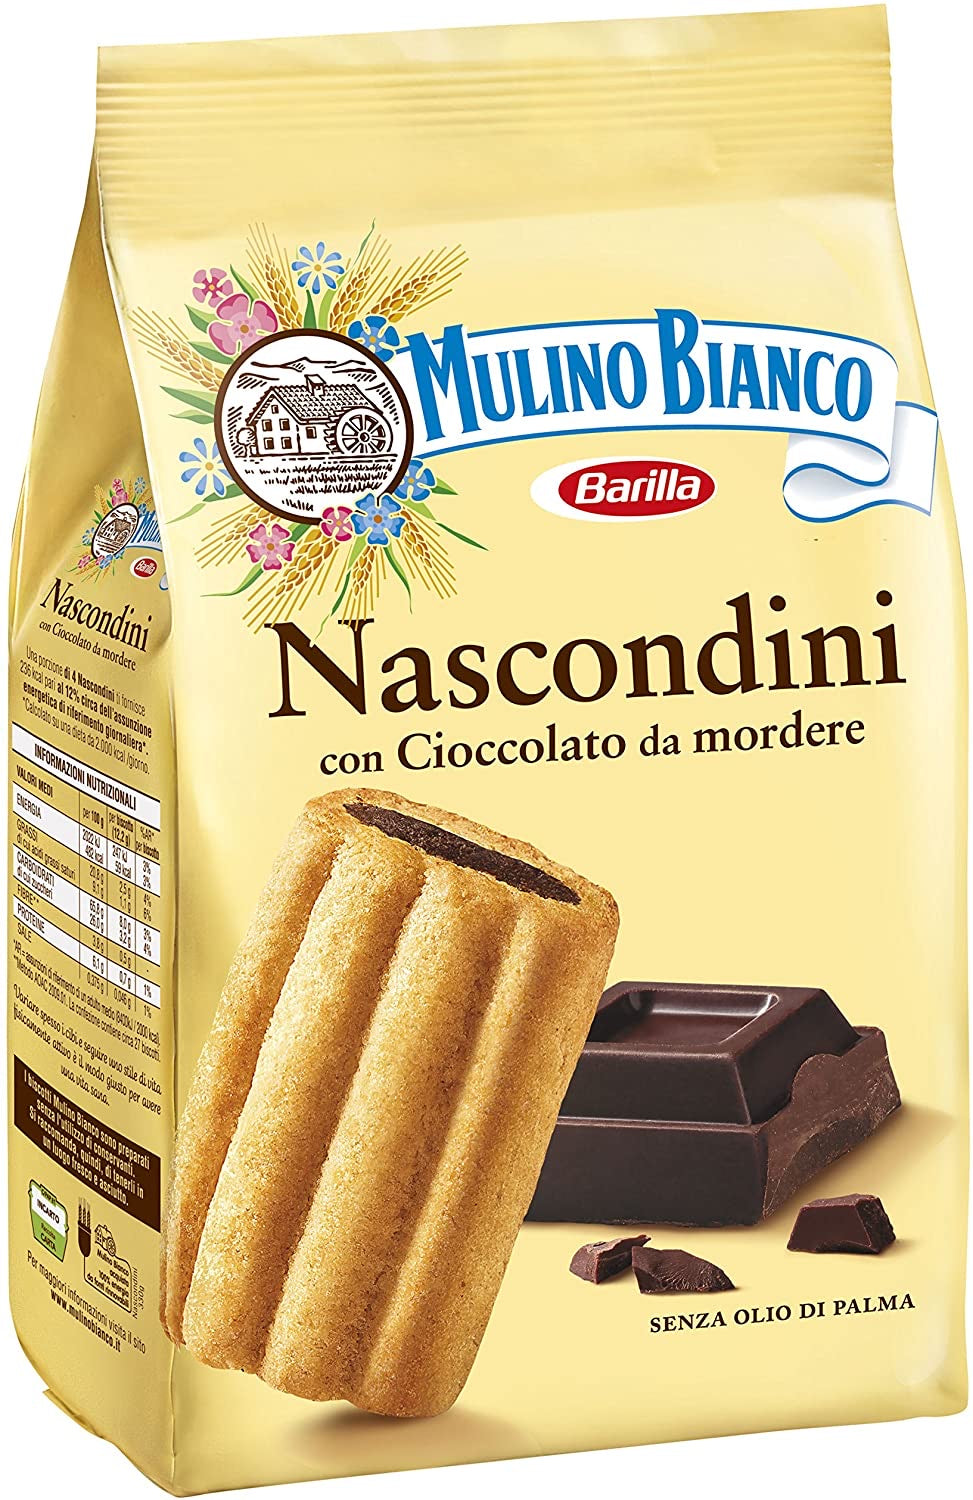 Mulino Bianco Buongrano with whole wheat flour – Made In Eatalia